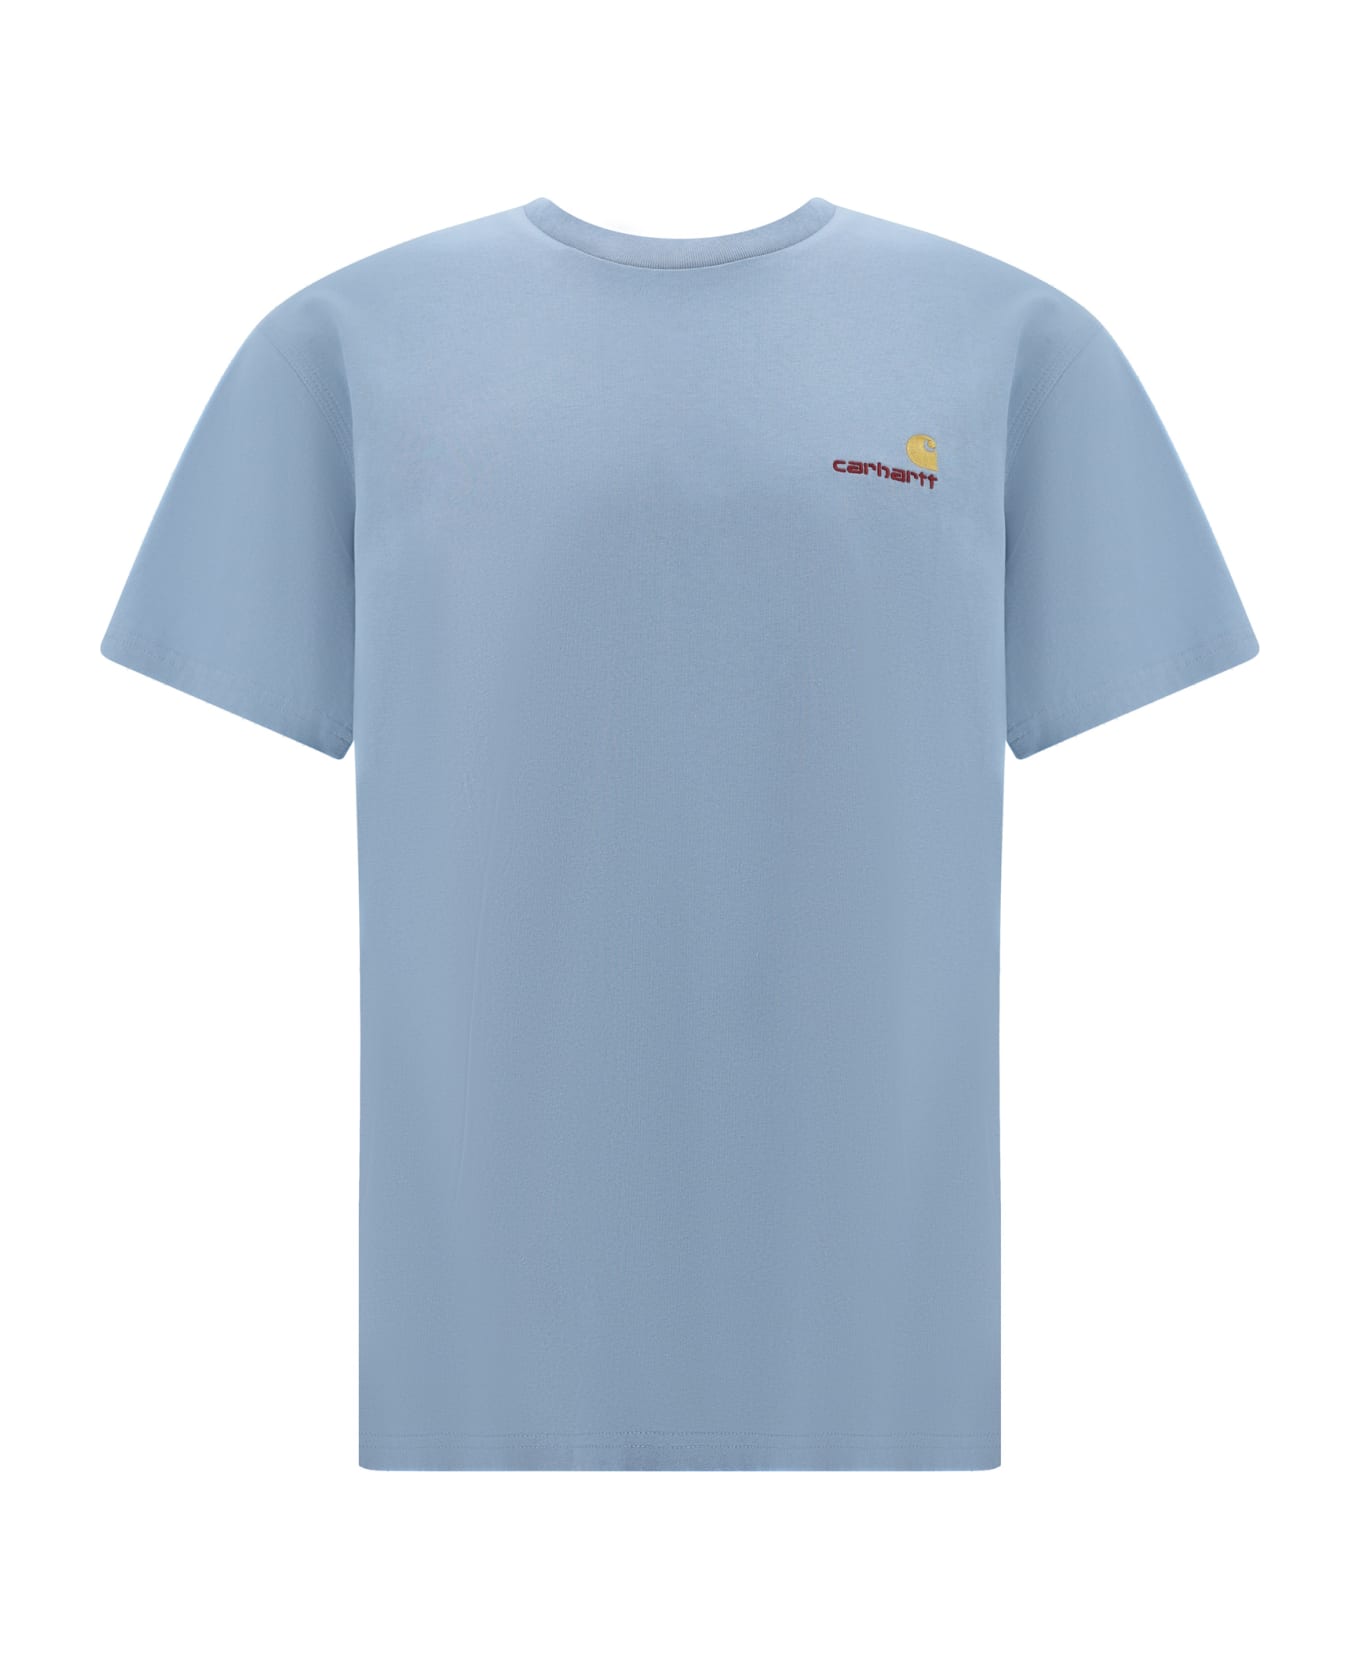 Carhartt T-shirt - Frosted Blue